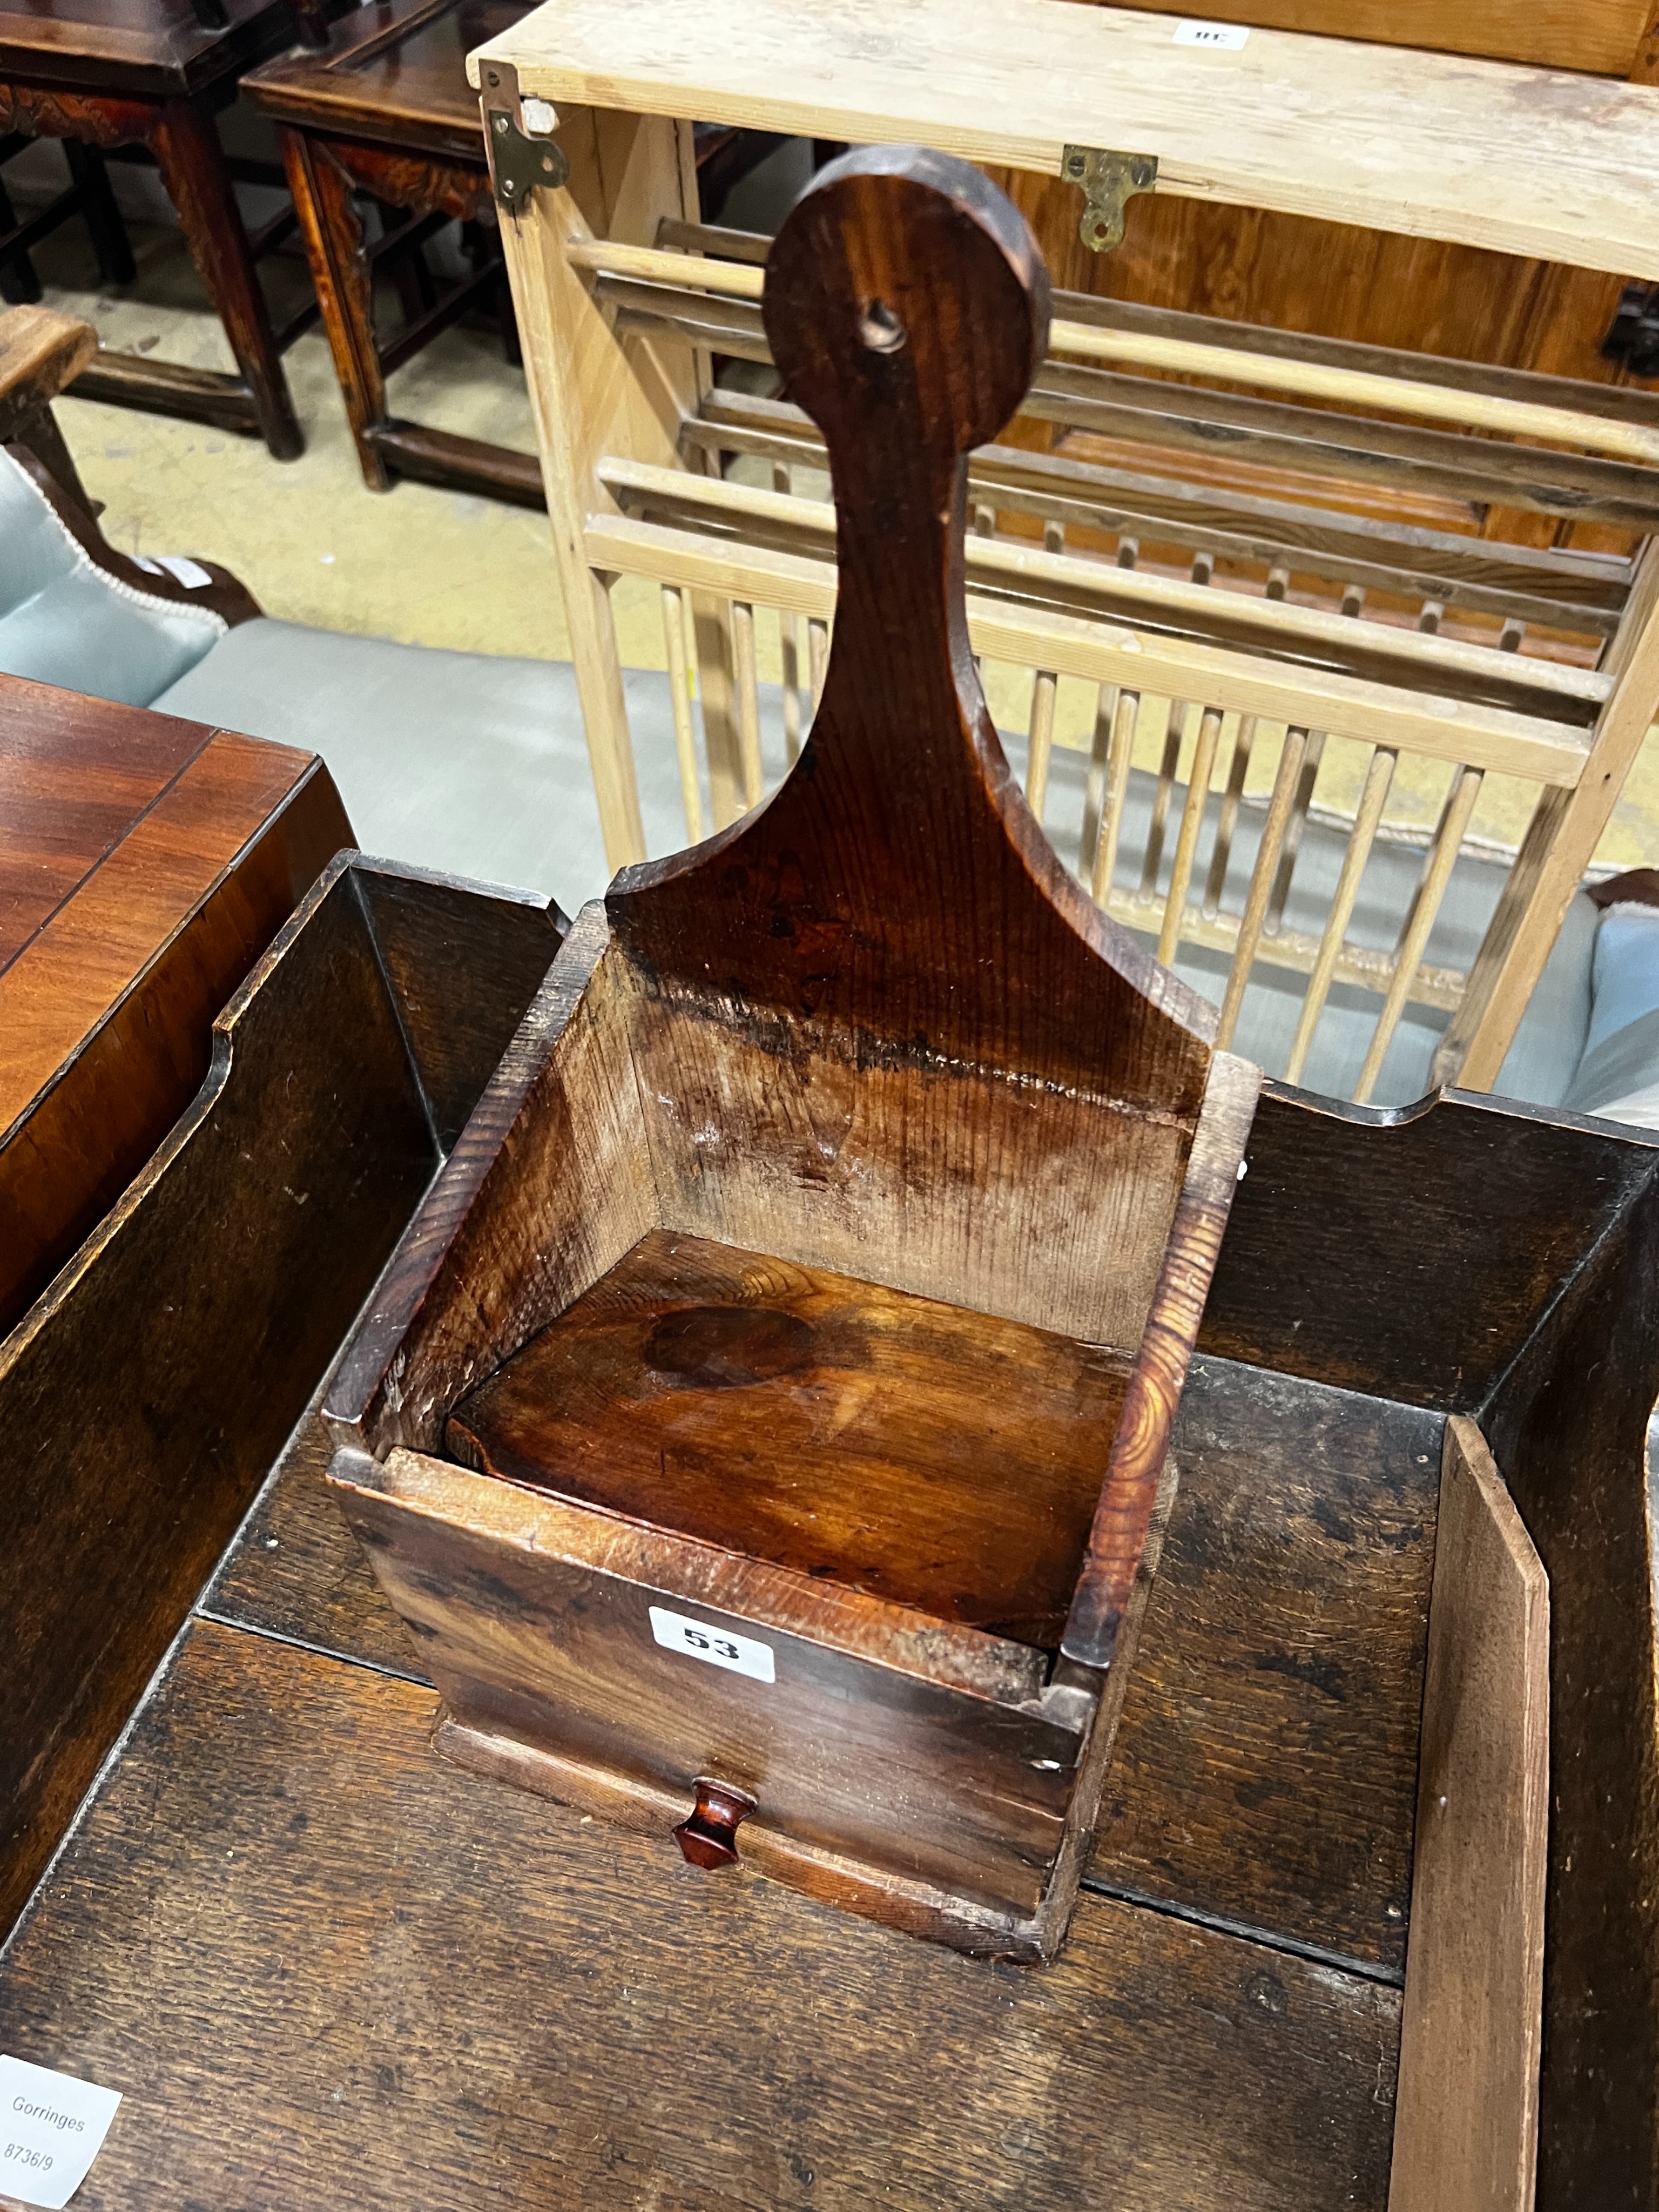 A 19th century yew wood hanging salt box, width 19cm, depth 17cm, height 43cm